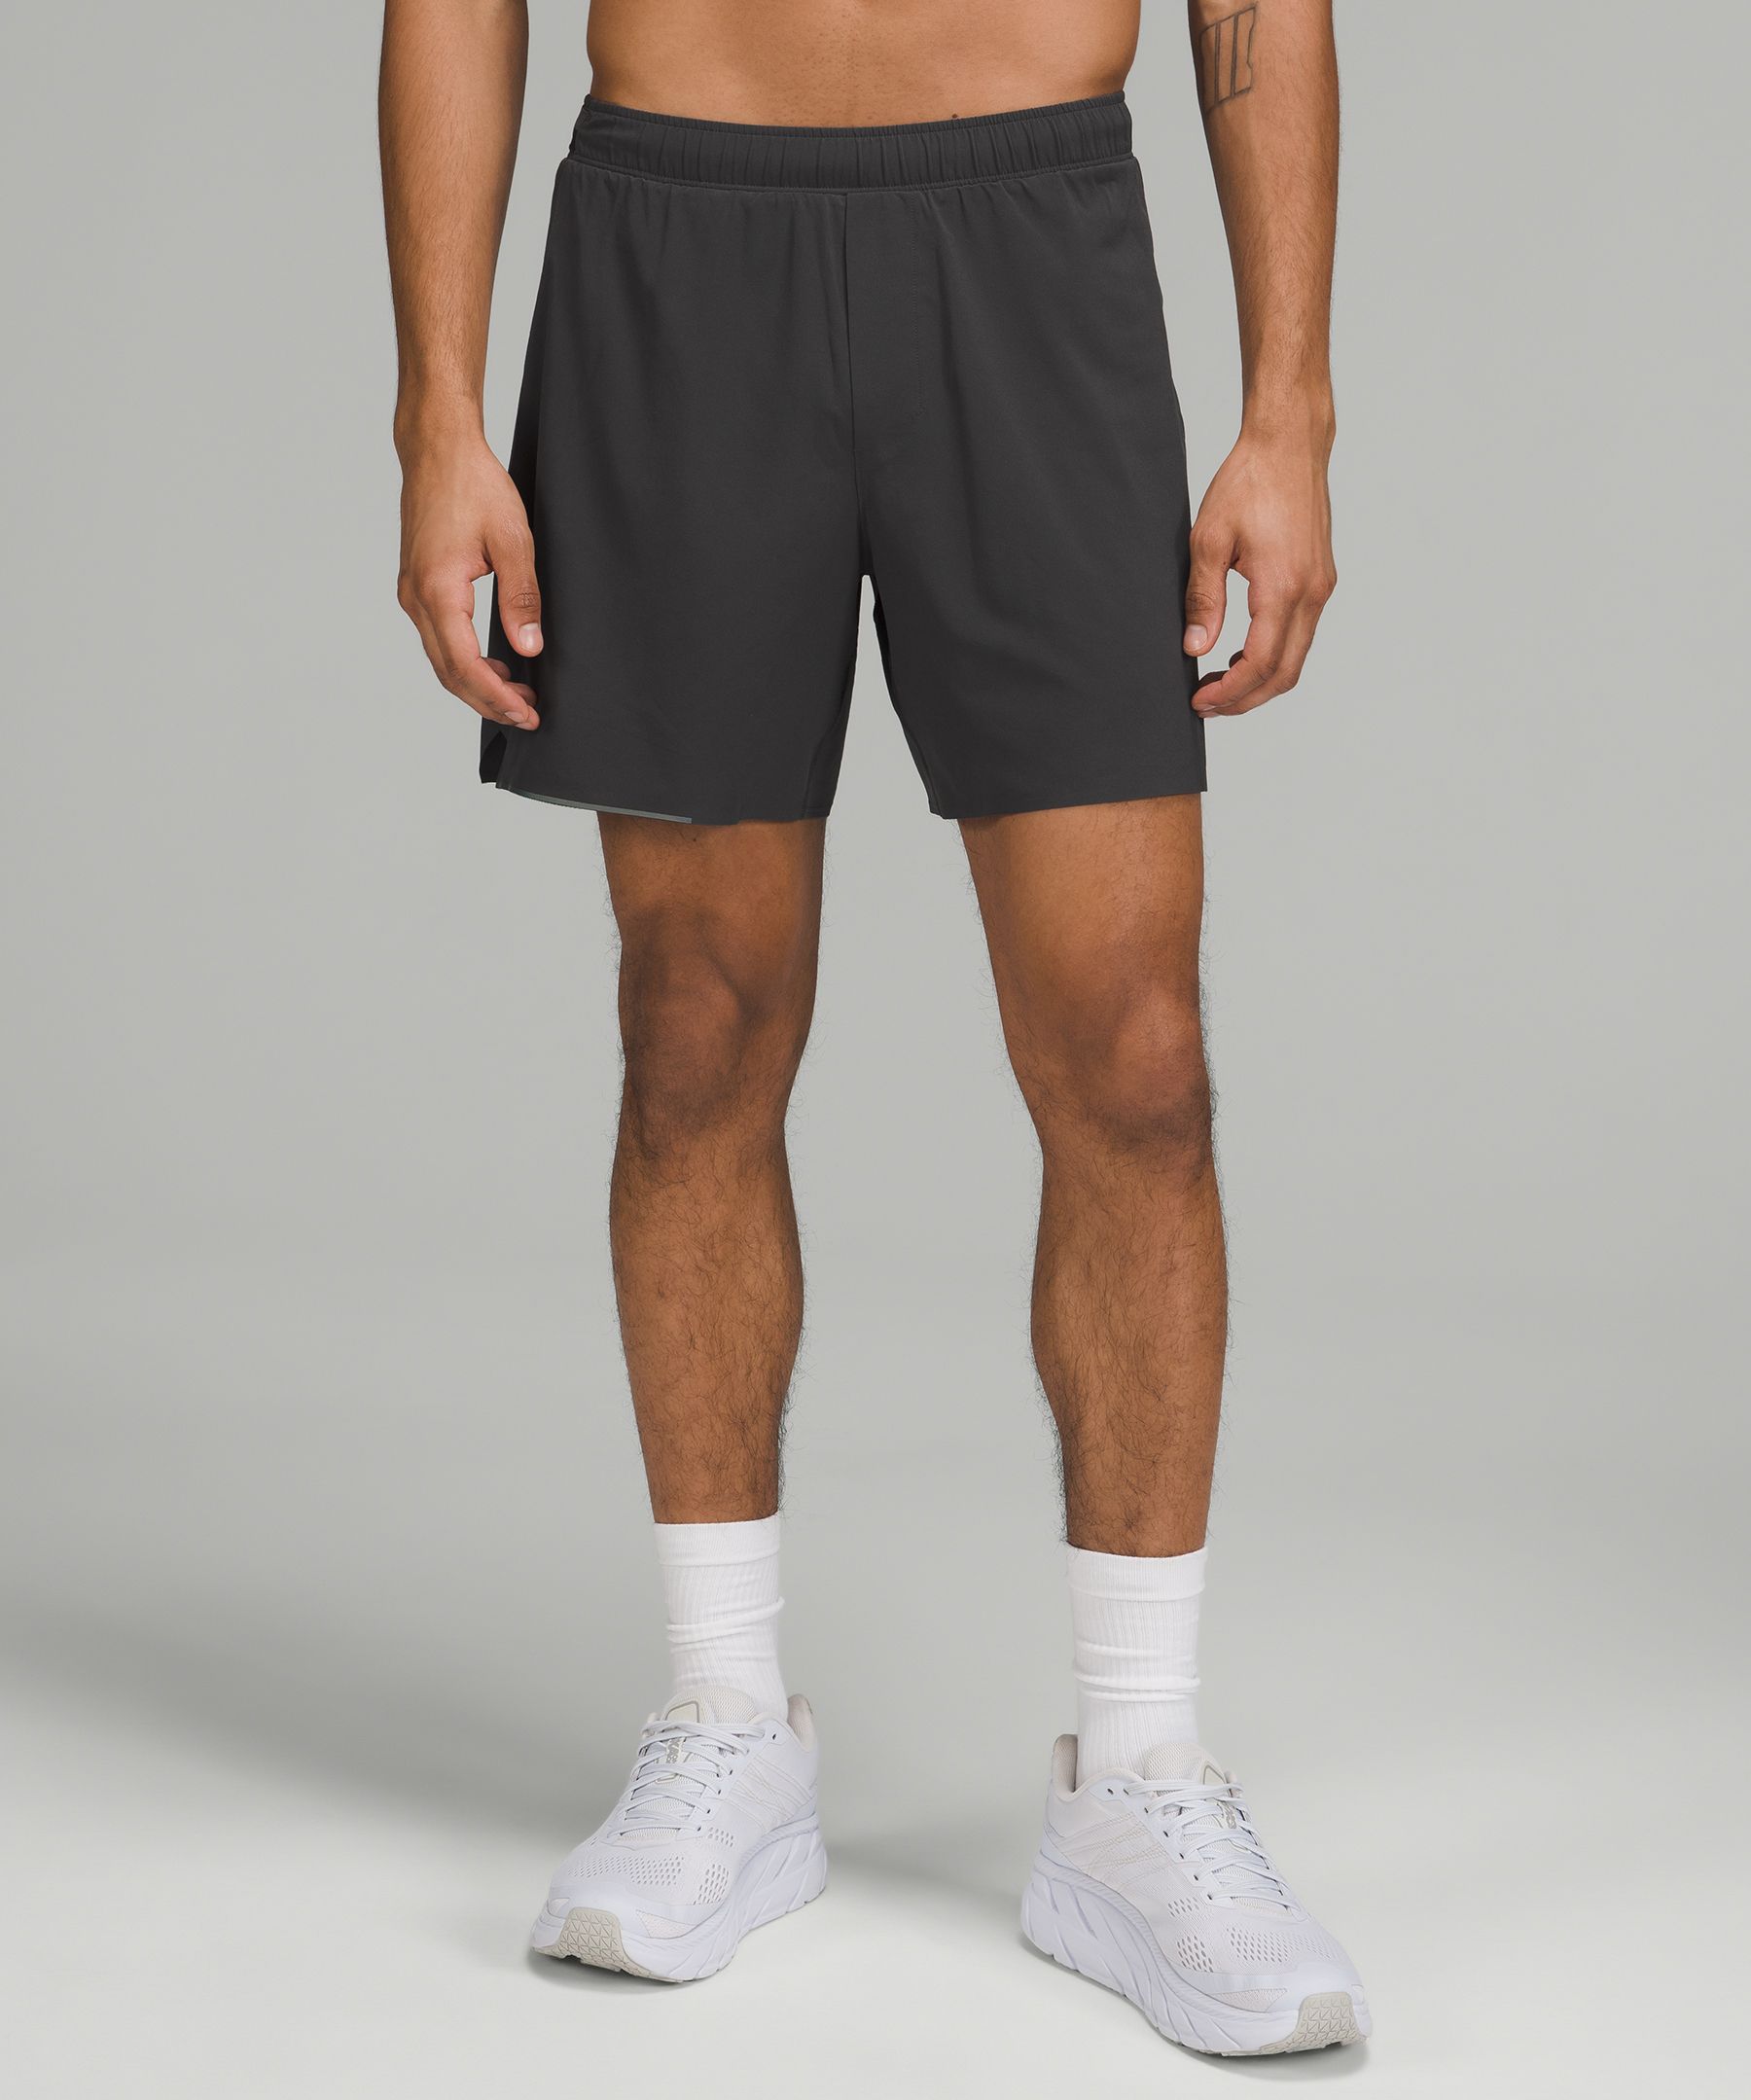 Lululemon Surge Lined Shorts 6" In Graphite Grey